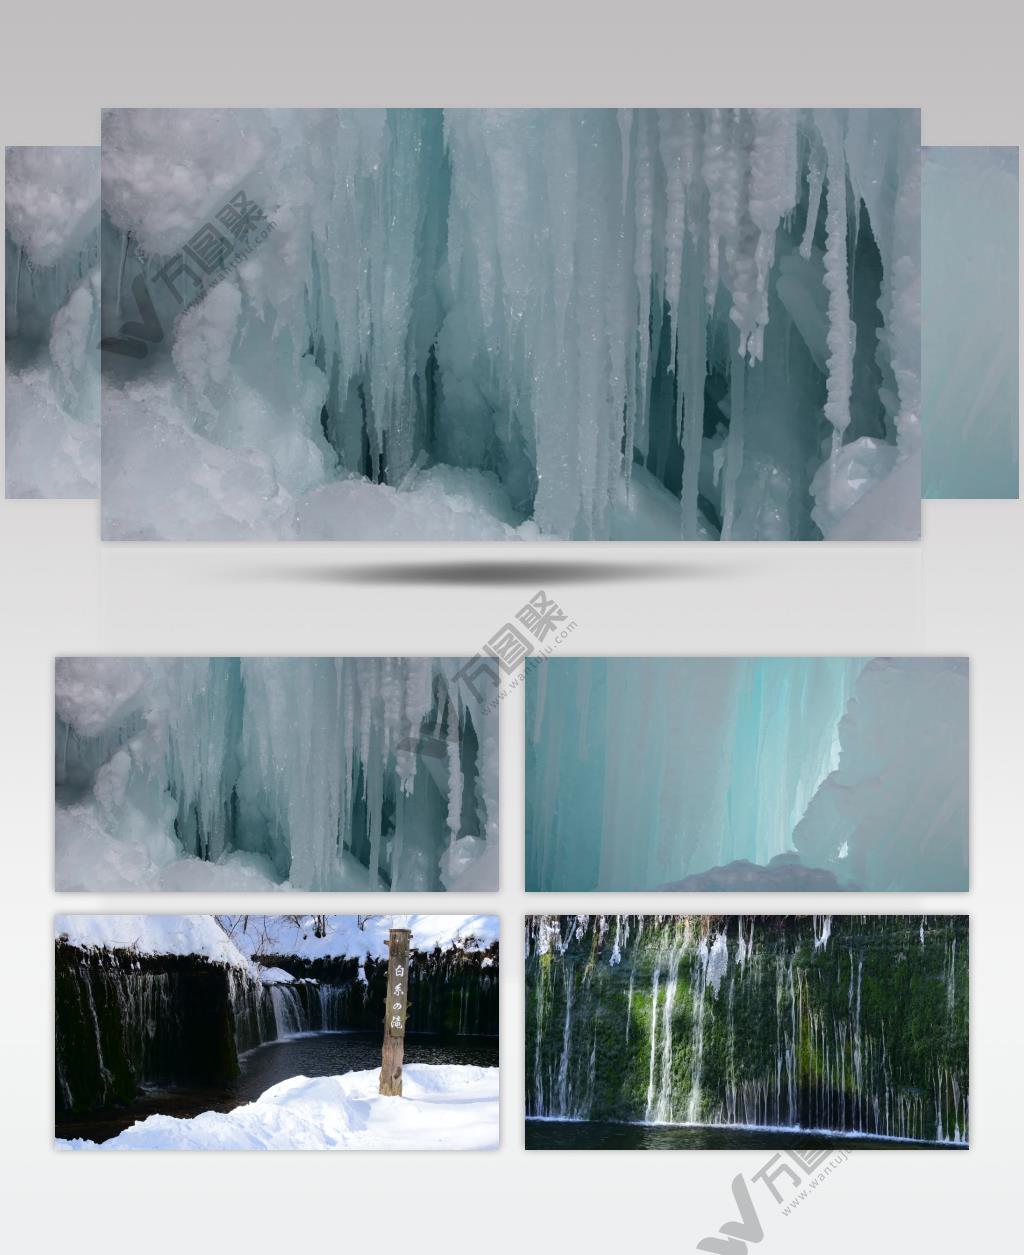 ［4K］ 天然的冰冻 4K片源 超高清实拍视频素材 自然风景山水花草树木瀑布超清素材